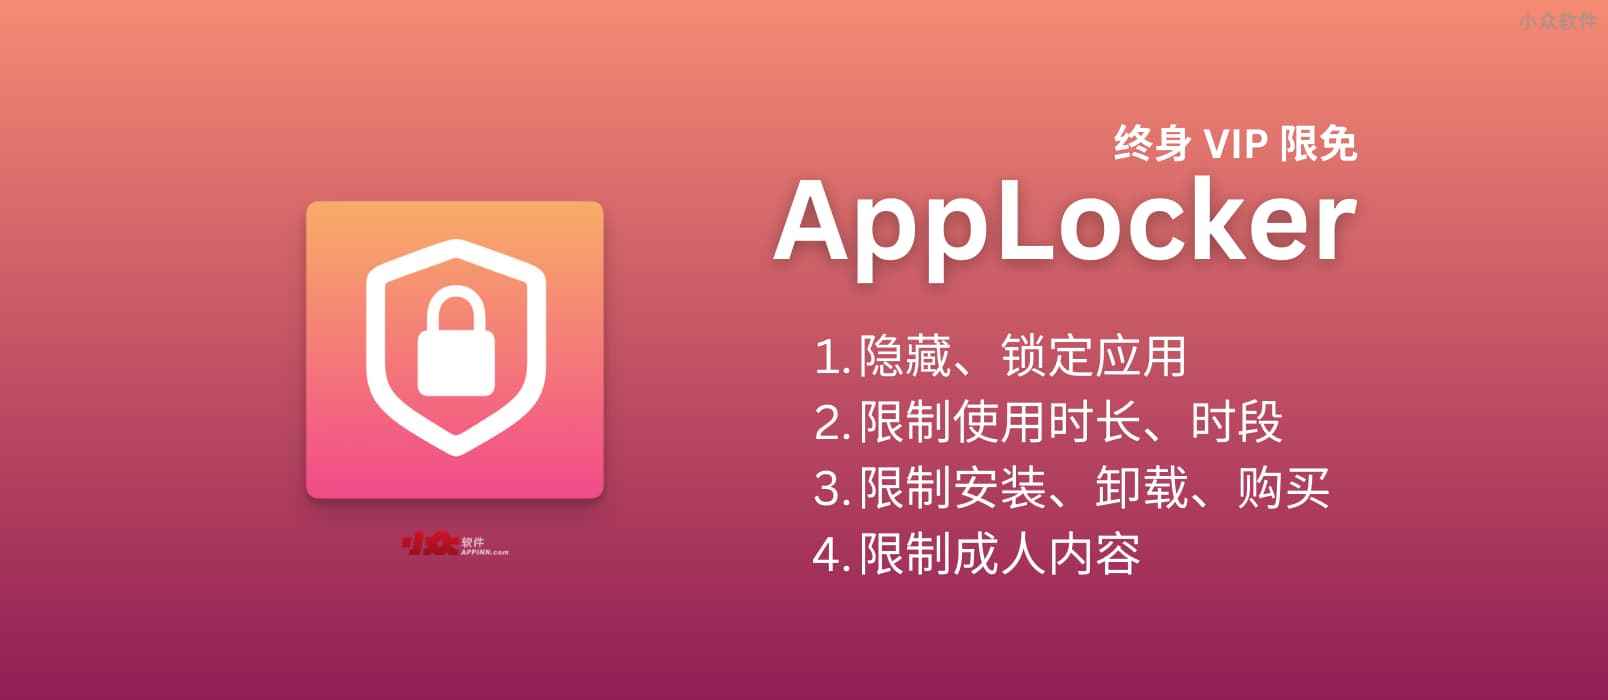 AALocker – 隐藏应用不再安卓专属，苹果用户也可以拥有了，终身 VIP 内购限免[iPhone/iPad]